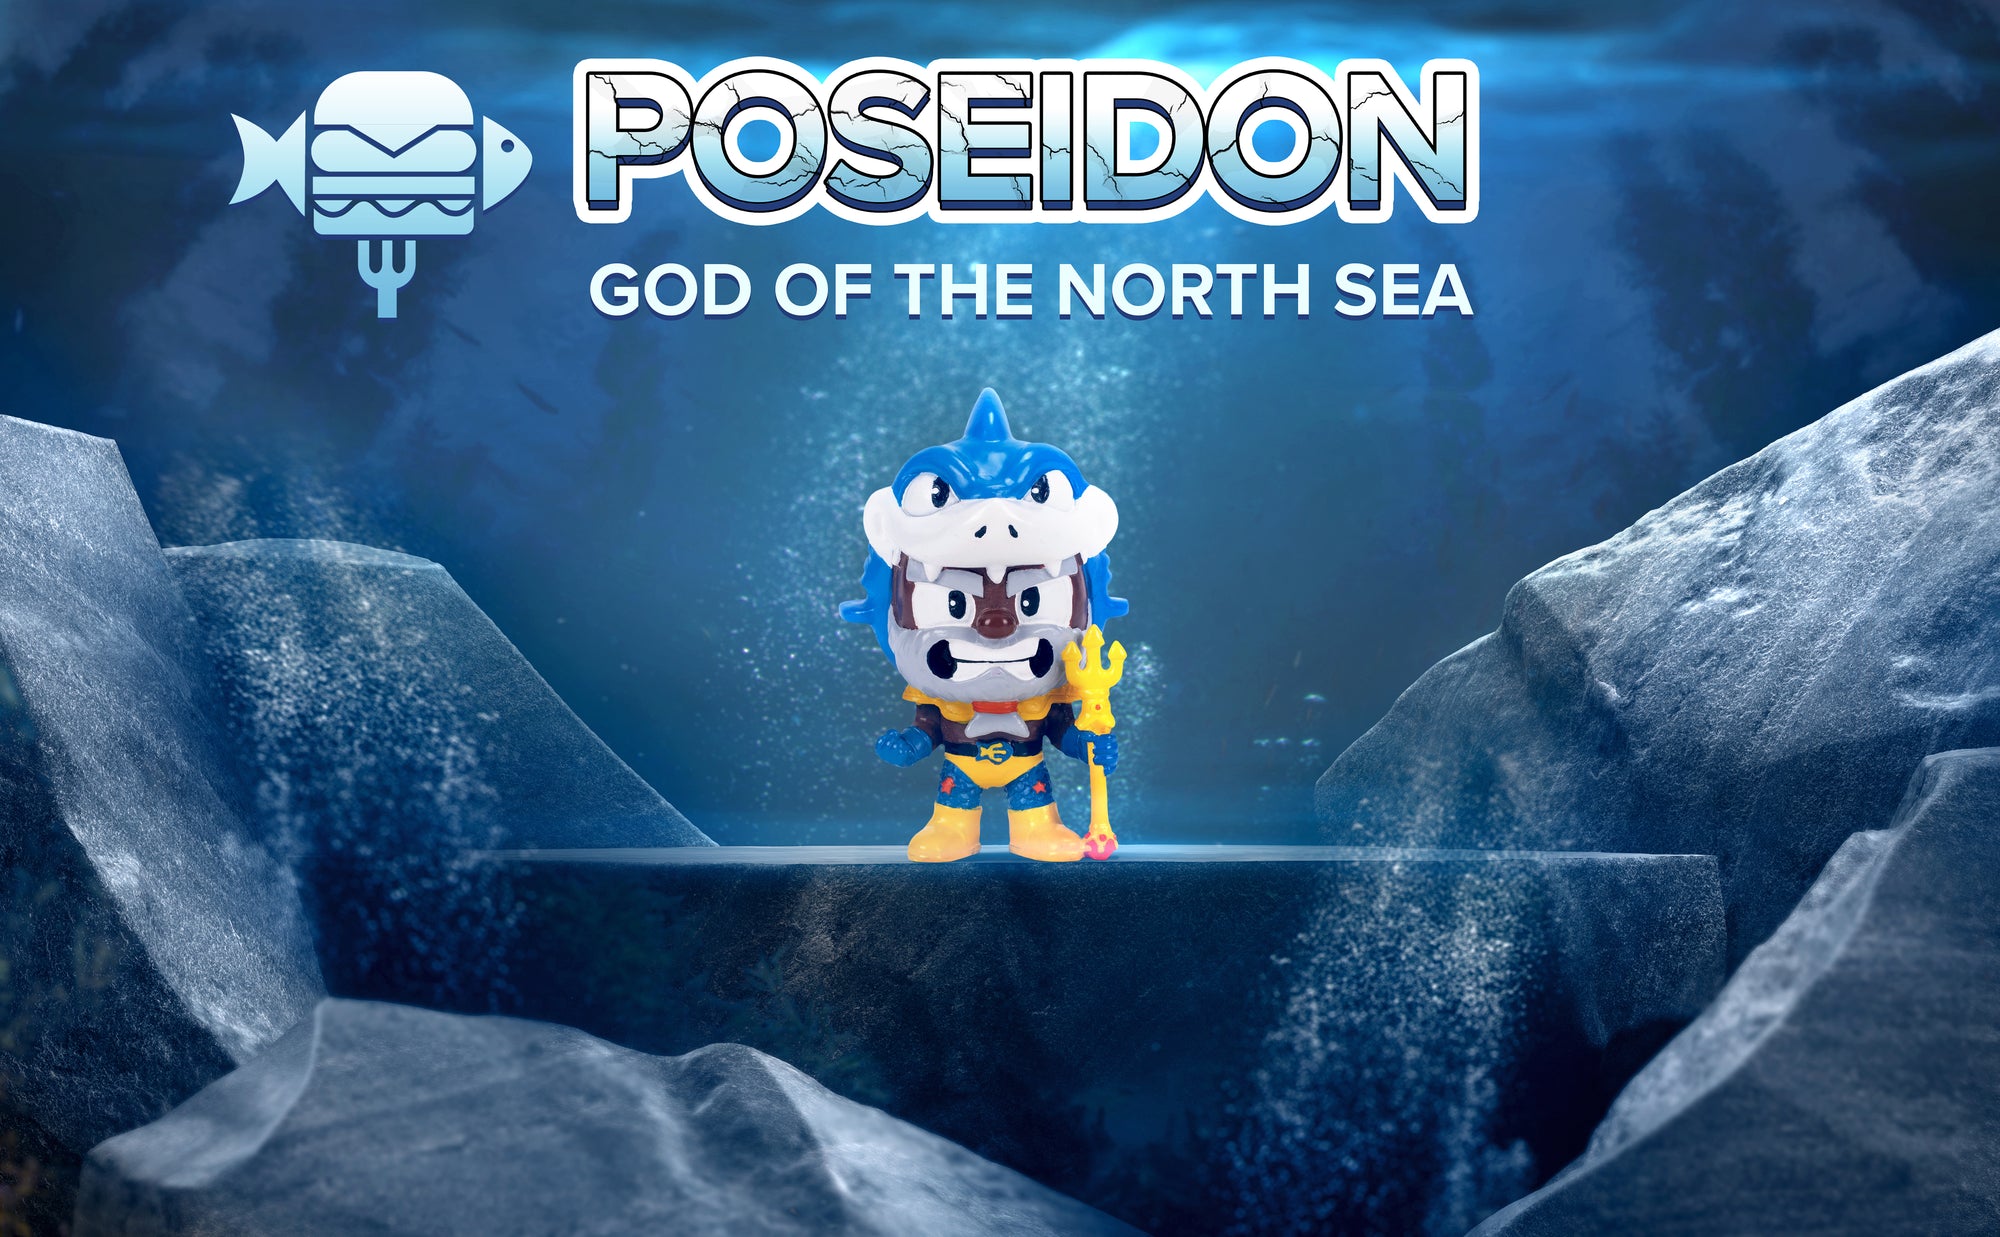 Poseidon Smashcraft collectible in realistic ocean. Text "Poseidon, god of the North Sea" and Poseidon's fish burger logo